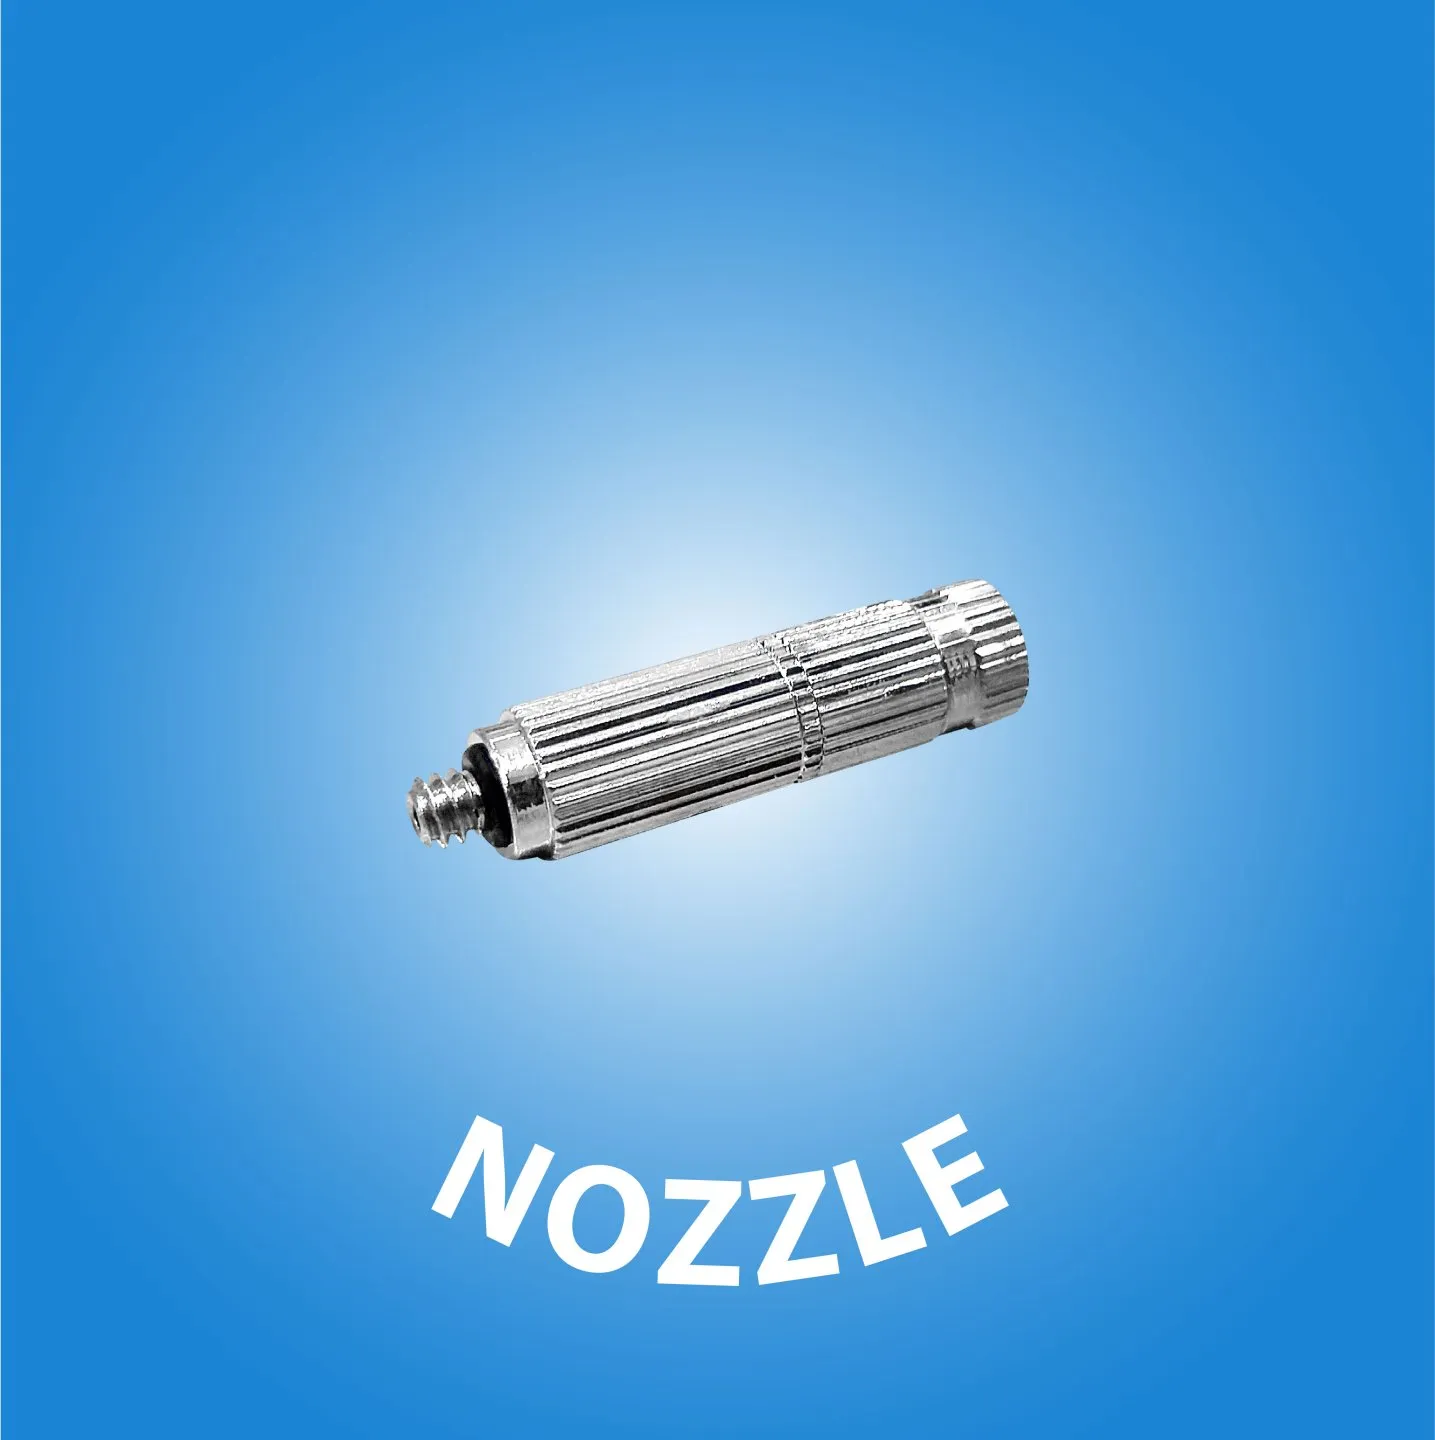  Nozzle cover kategori website 47